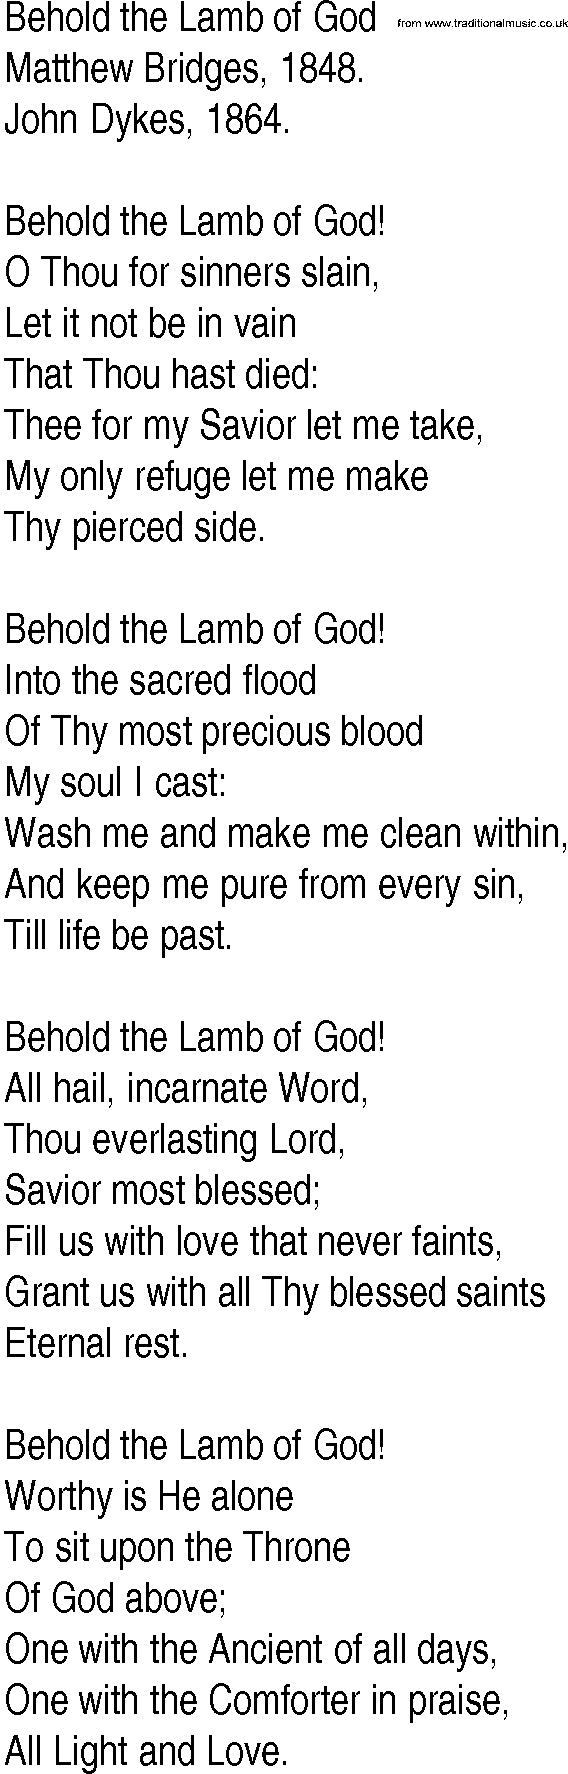 Hymn and Gospel Song: Behold the Lamb of God by Matthew Bridges lyrics